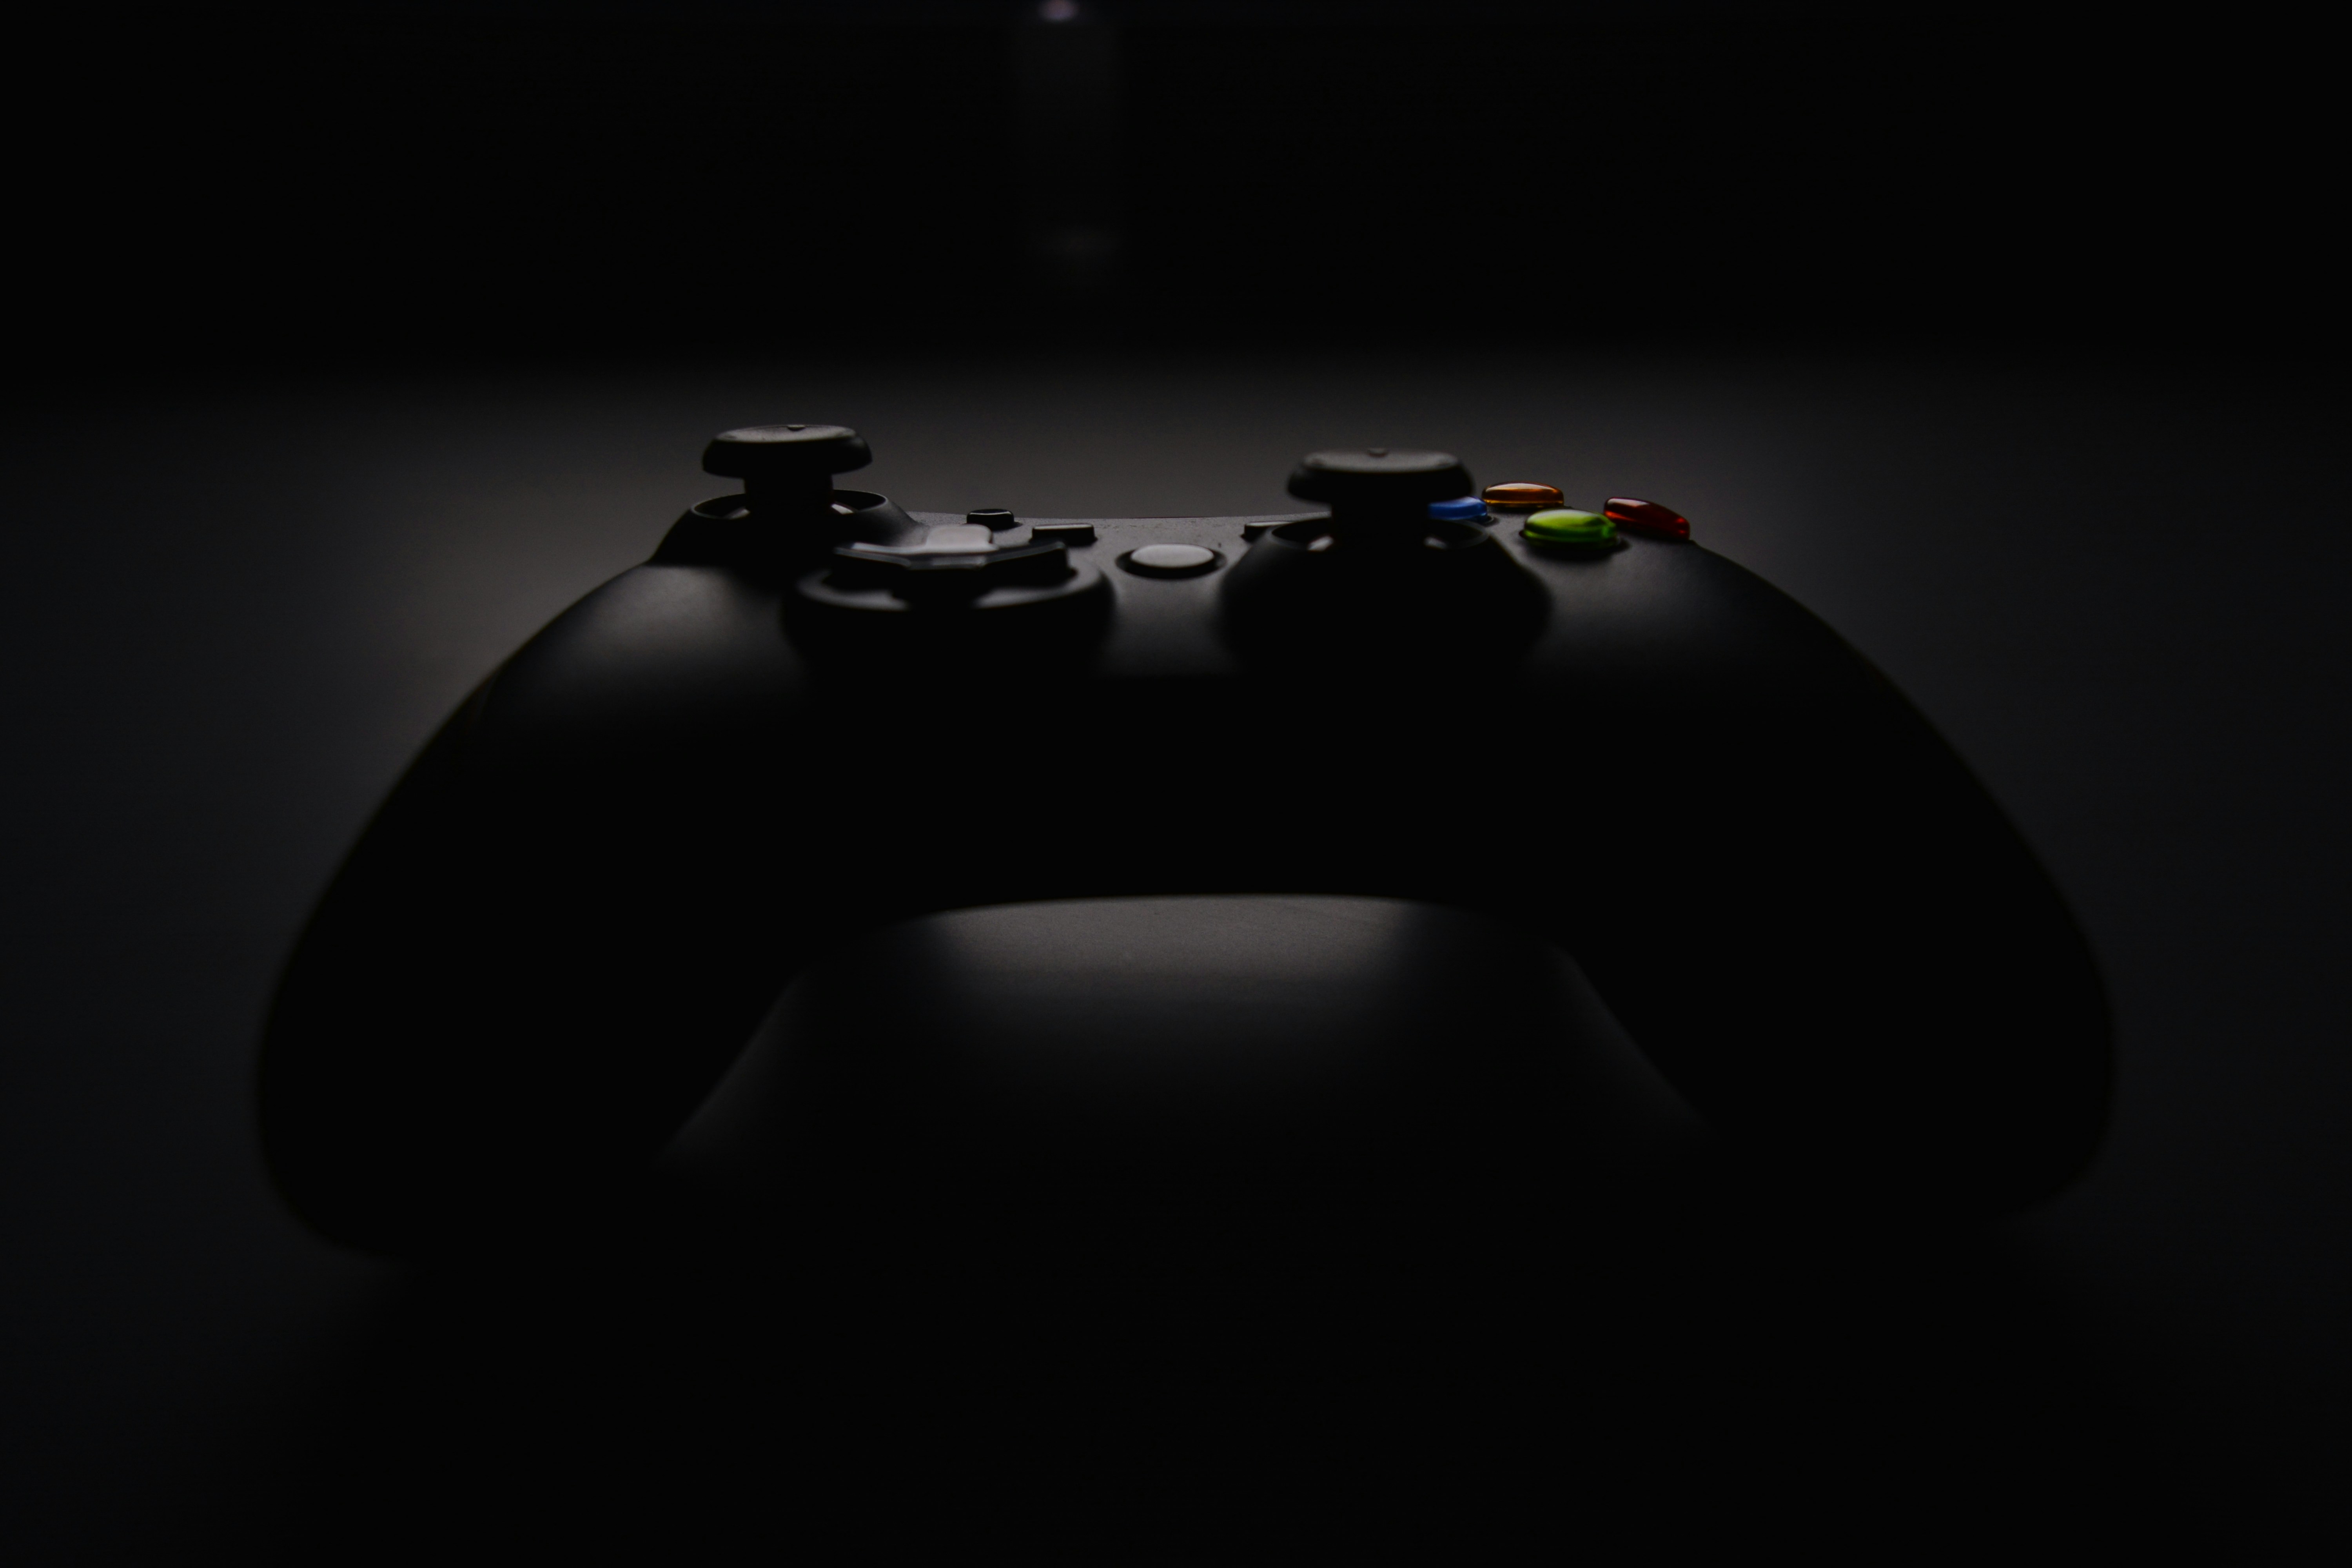 Dark Xbox controller